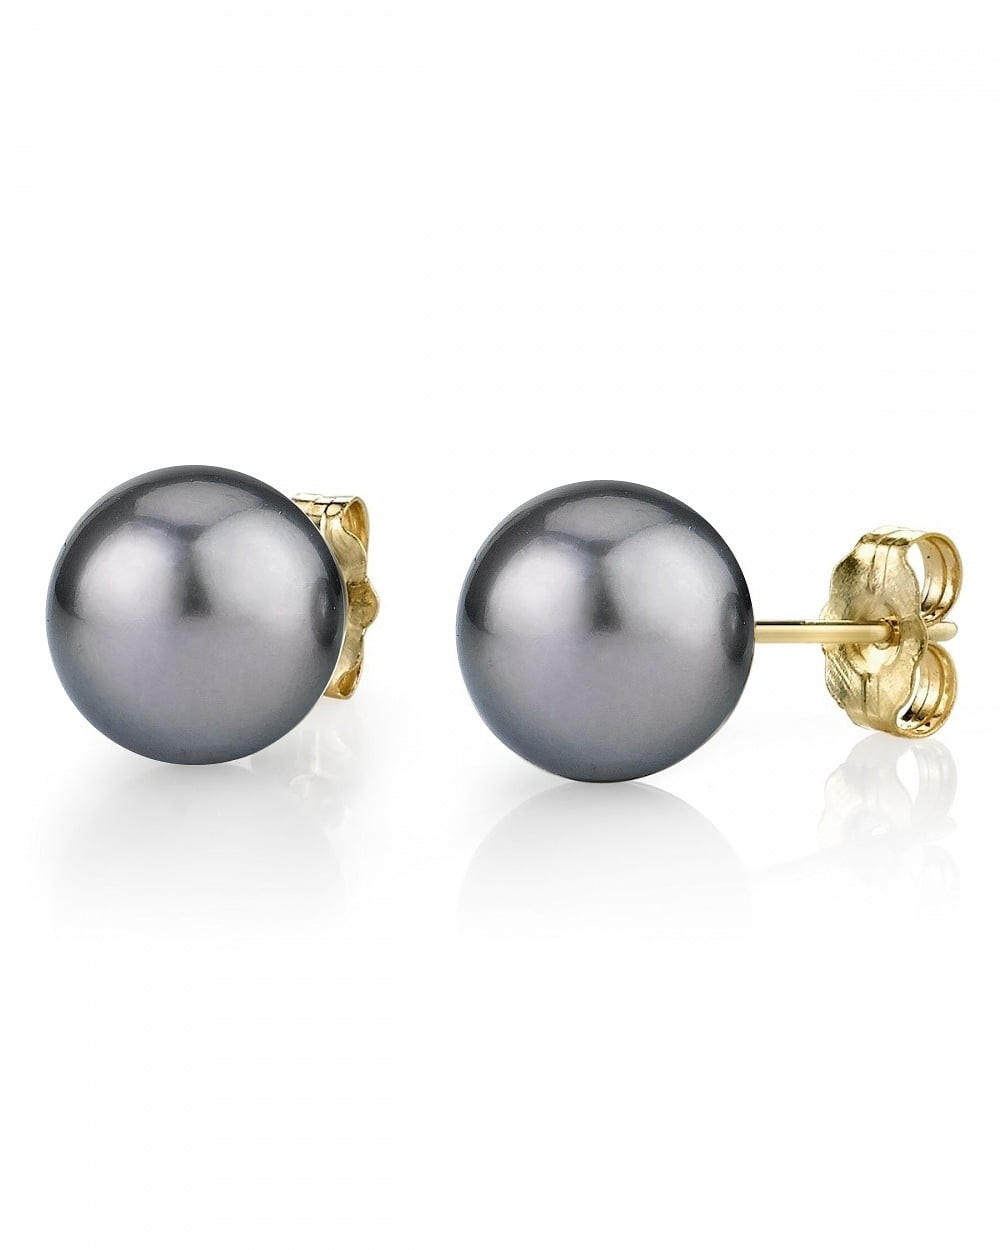 natural 13-13.5 mm South Sea Gray Pearl Earrings 14k